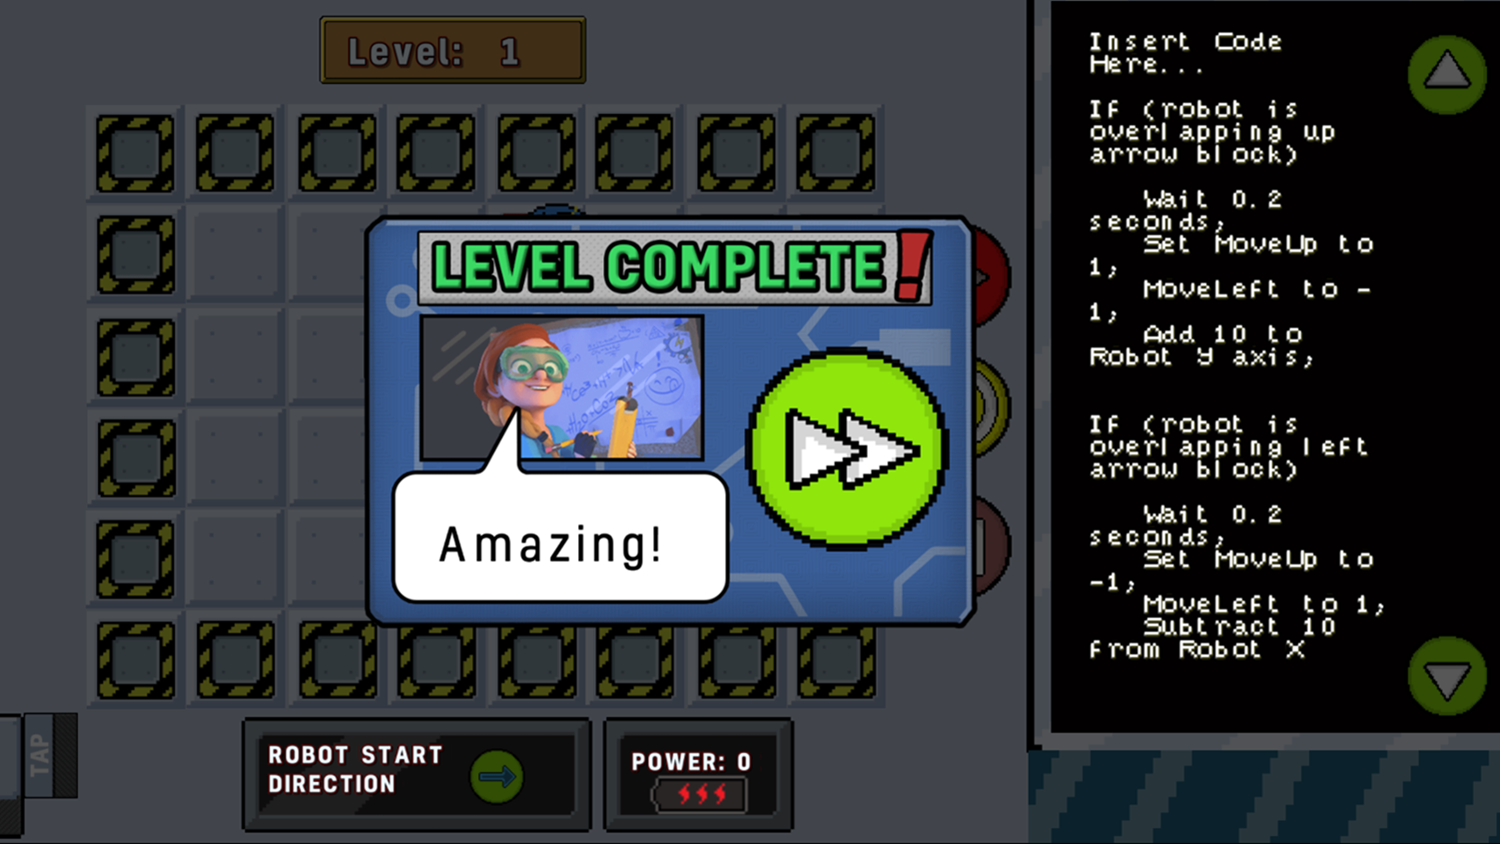 Rubi's Coding Class Game Level Complete Screenshot.